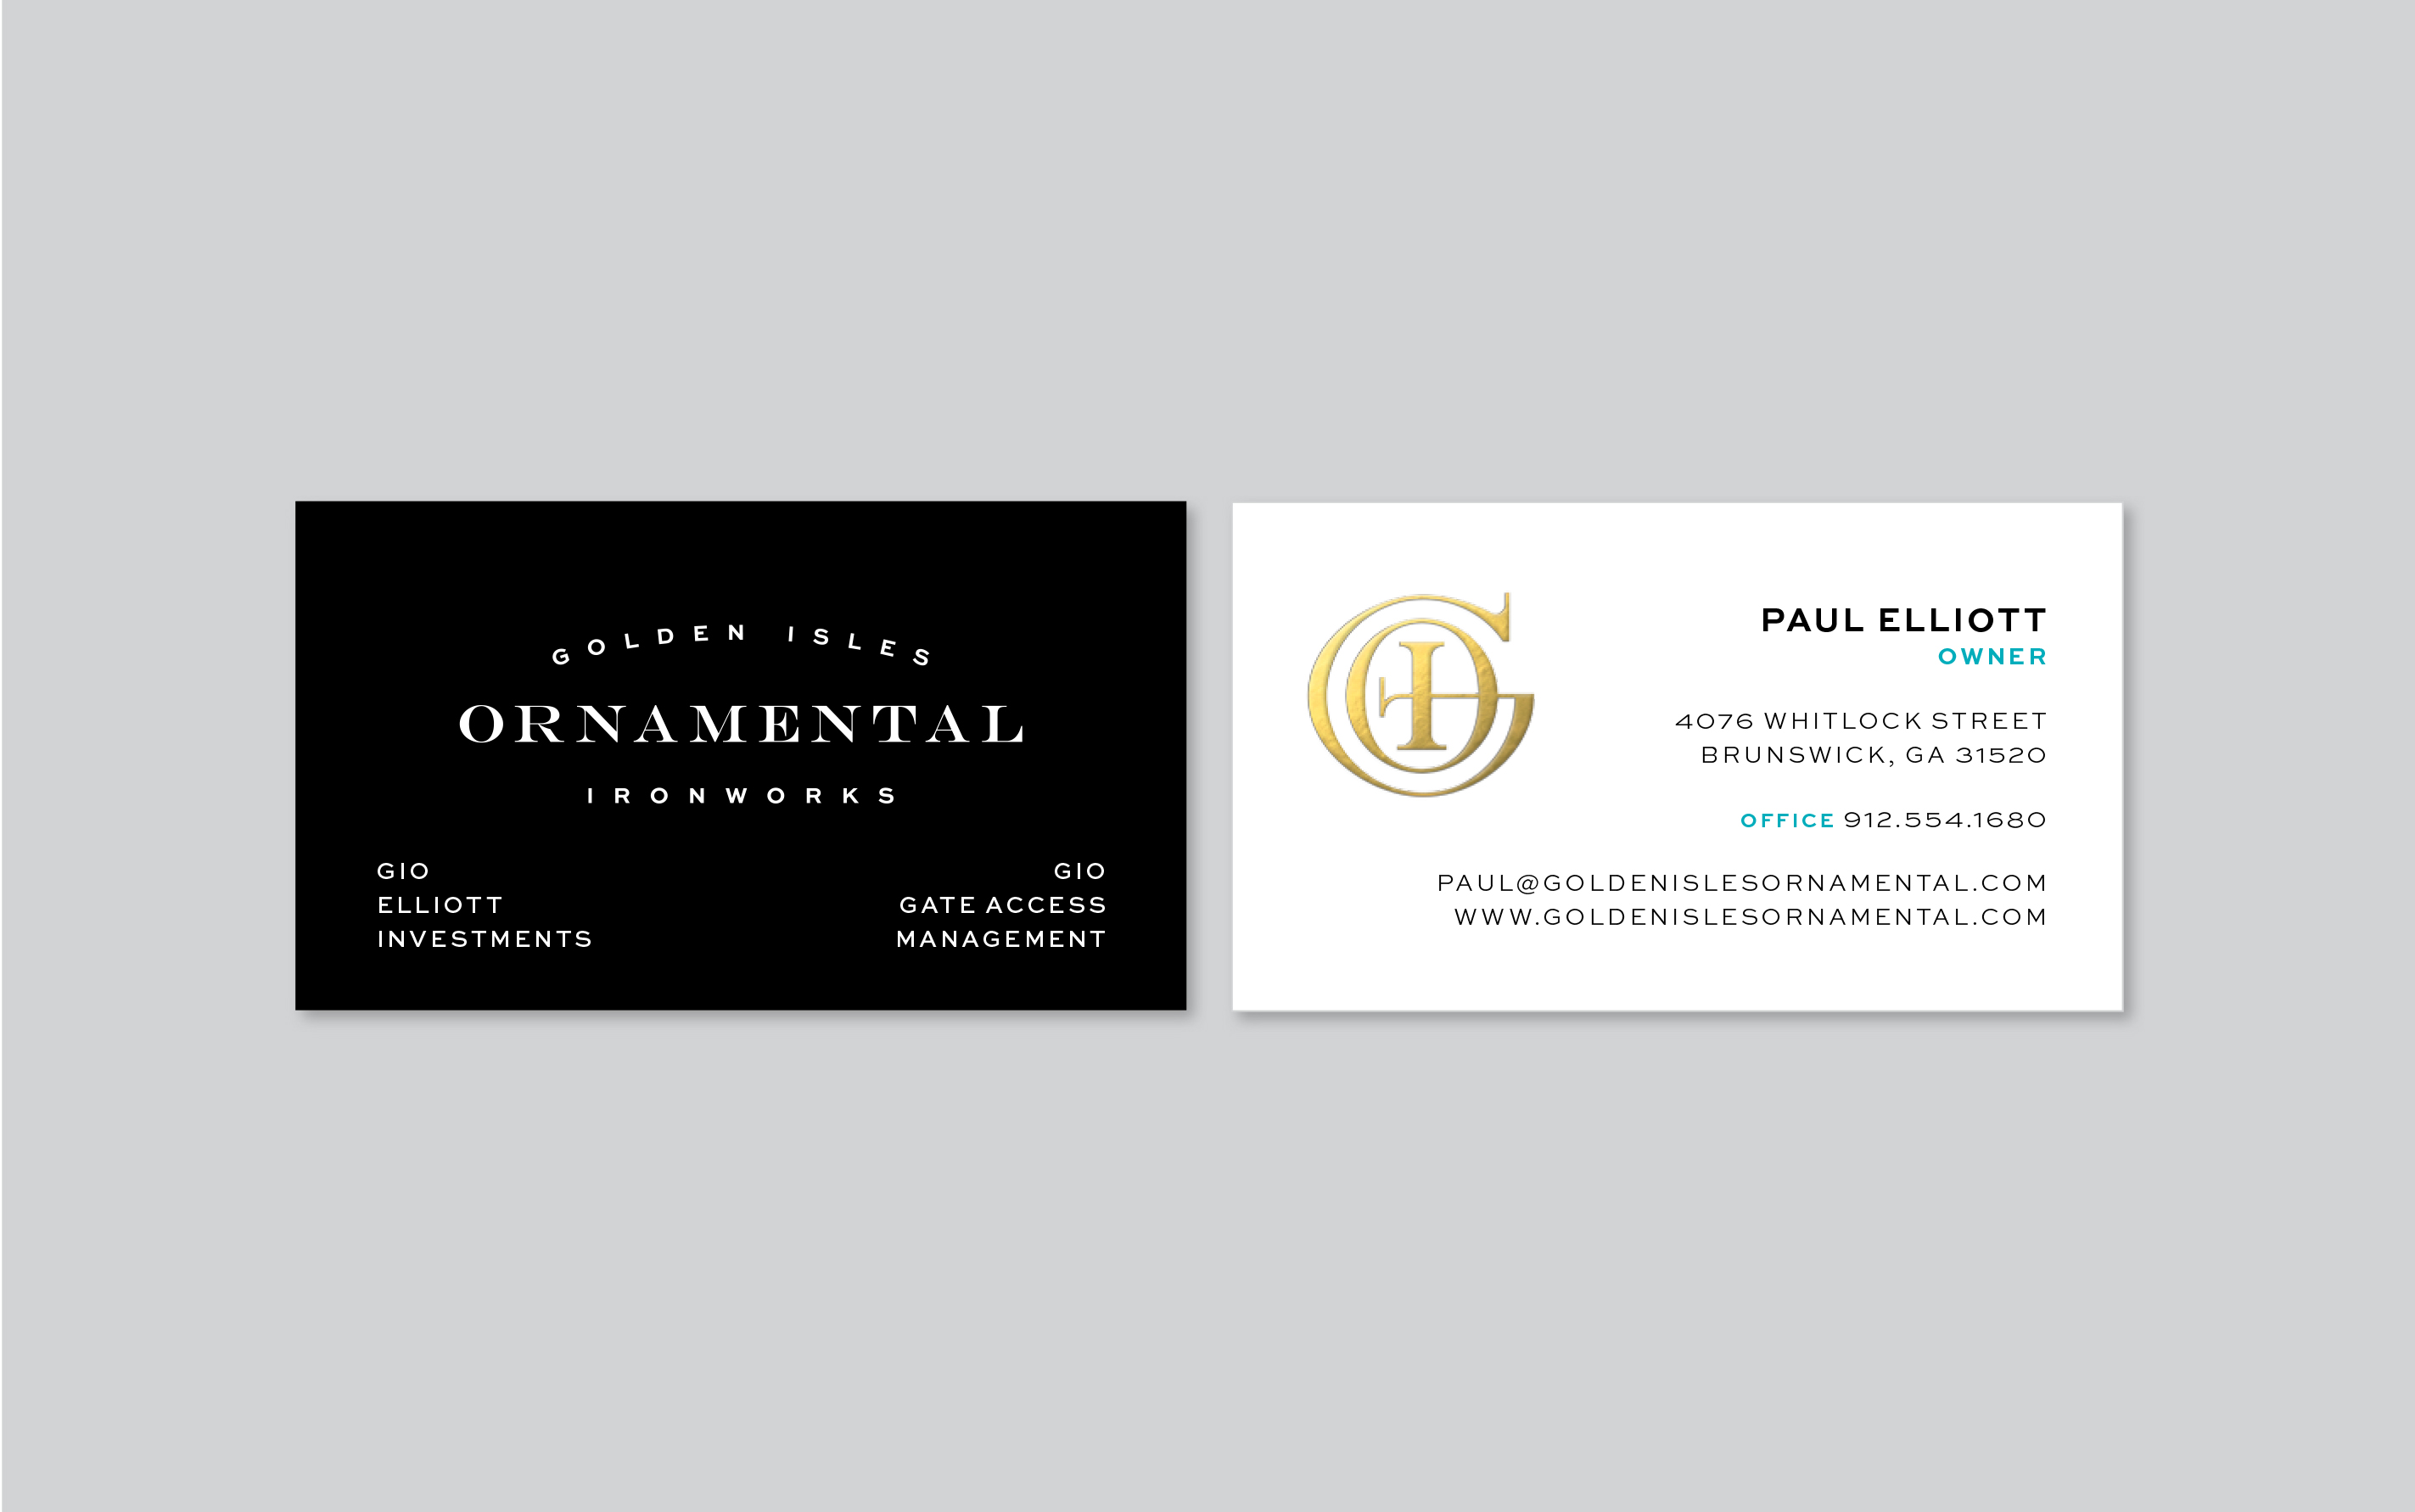 Golden Isles Ornamental business card mockup